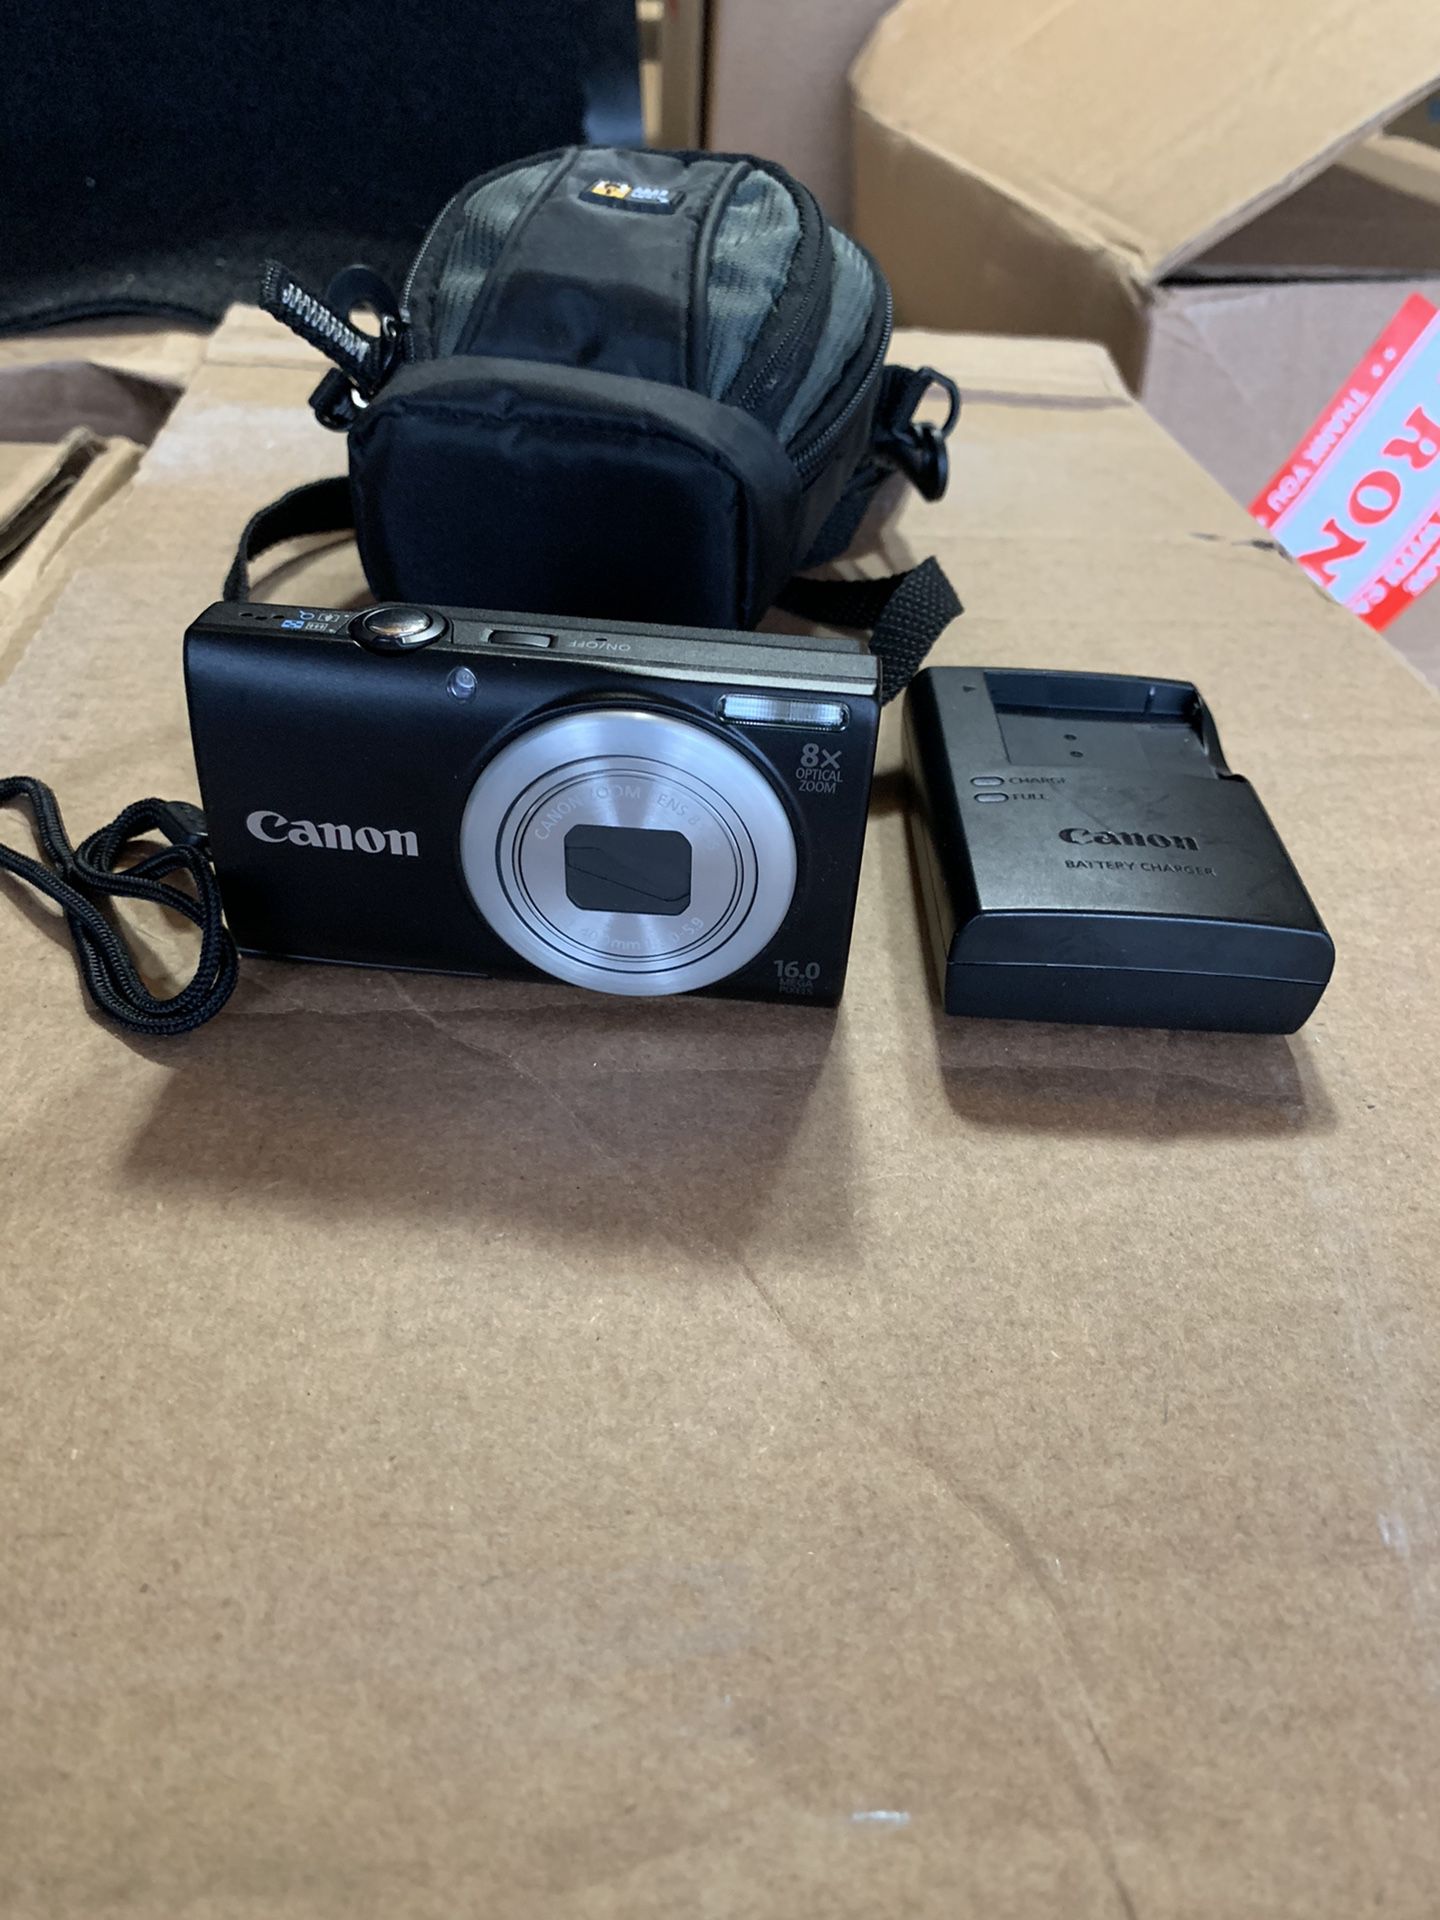 Cannon power shot digital camera